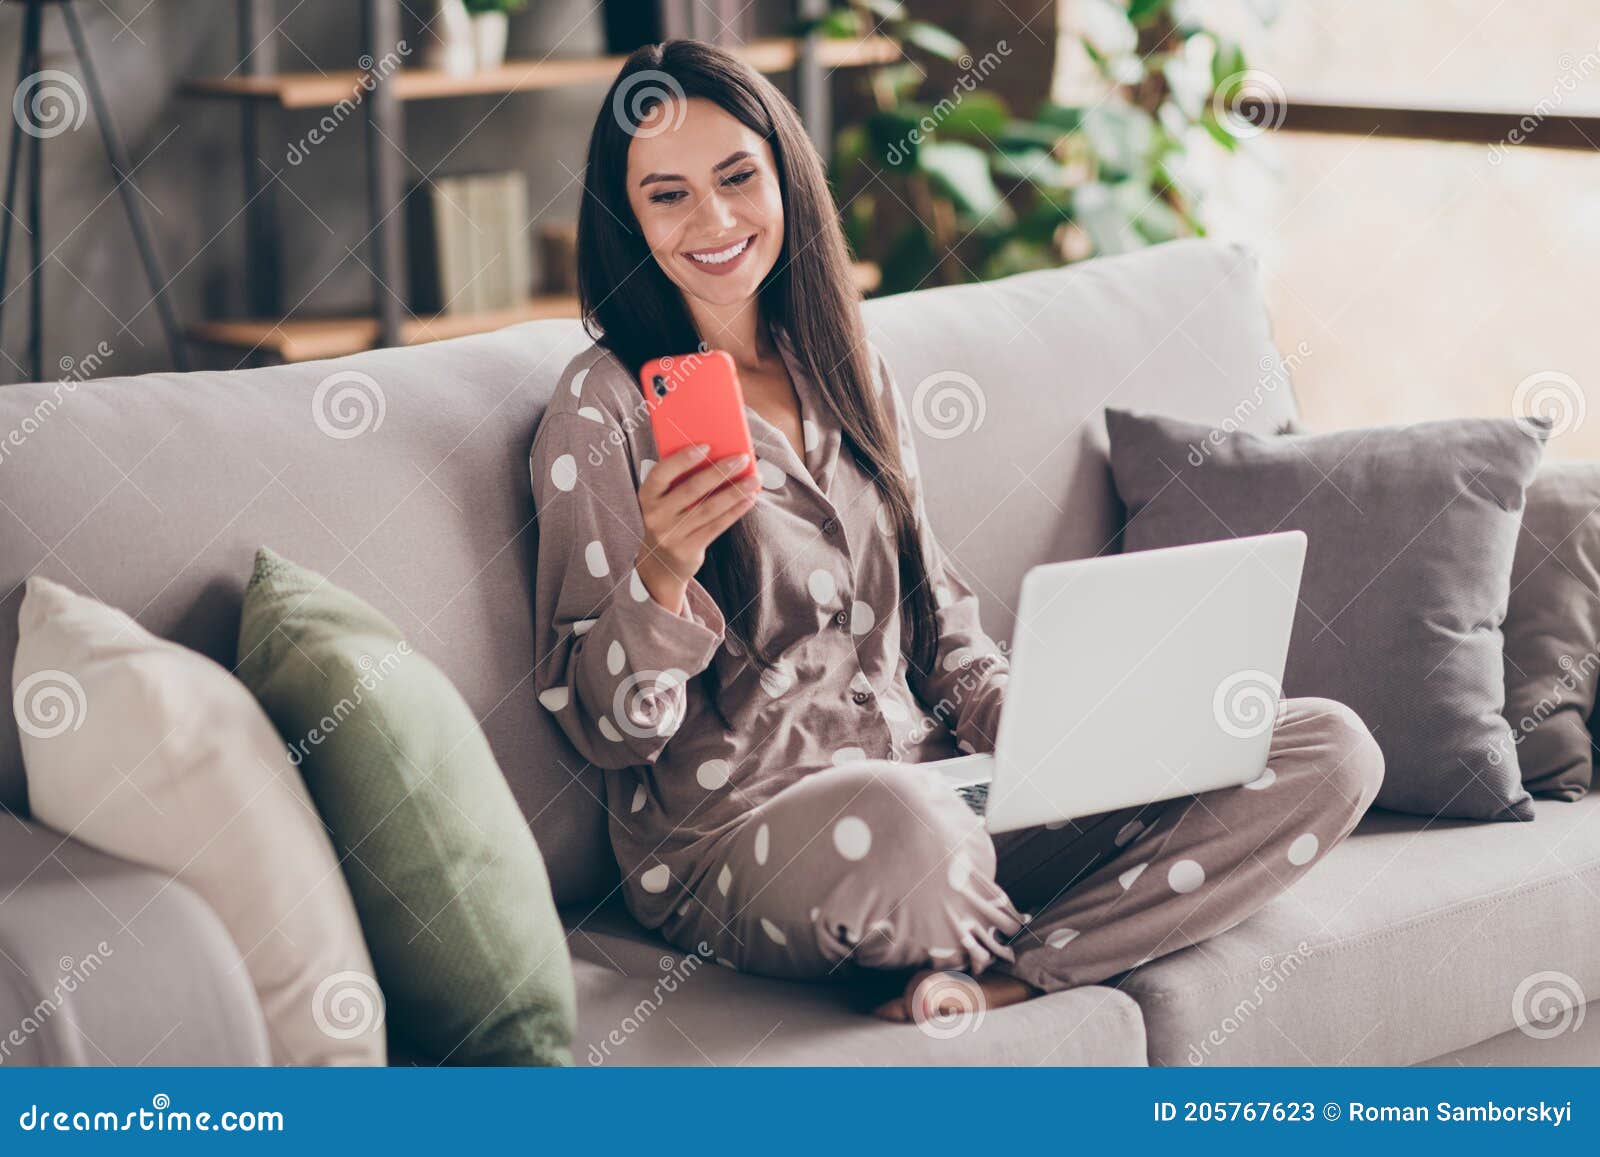 photo of nice optimistic girl sit write telephone hold laptop wear pijama at home